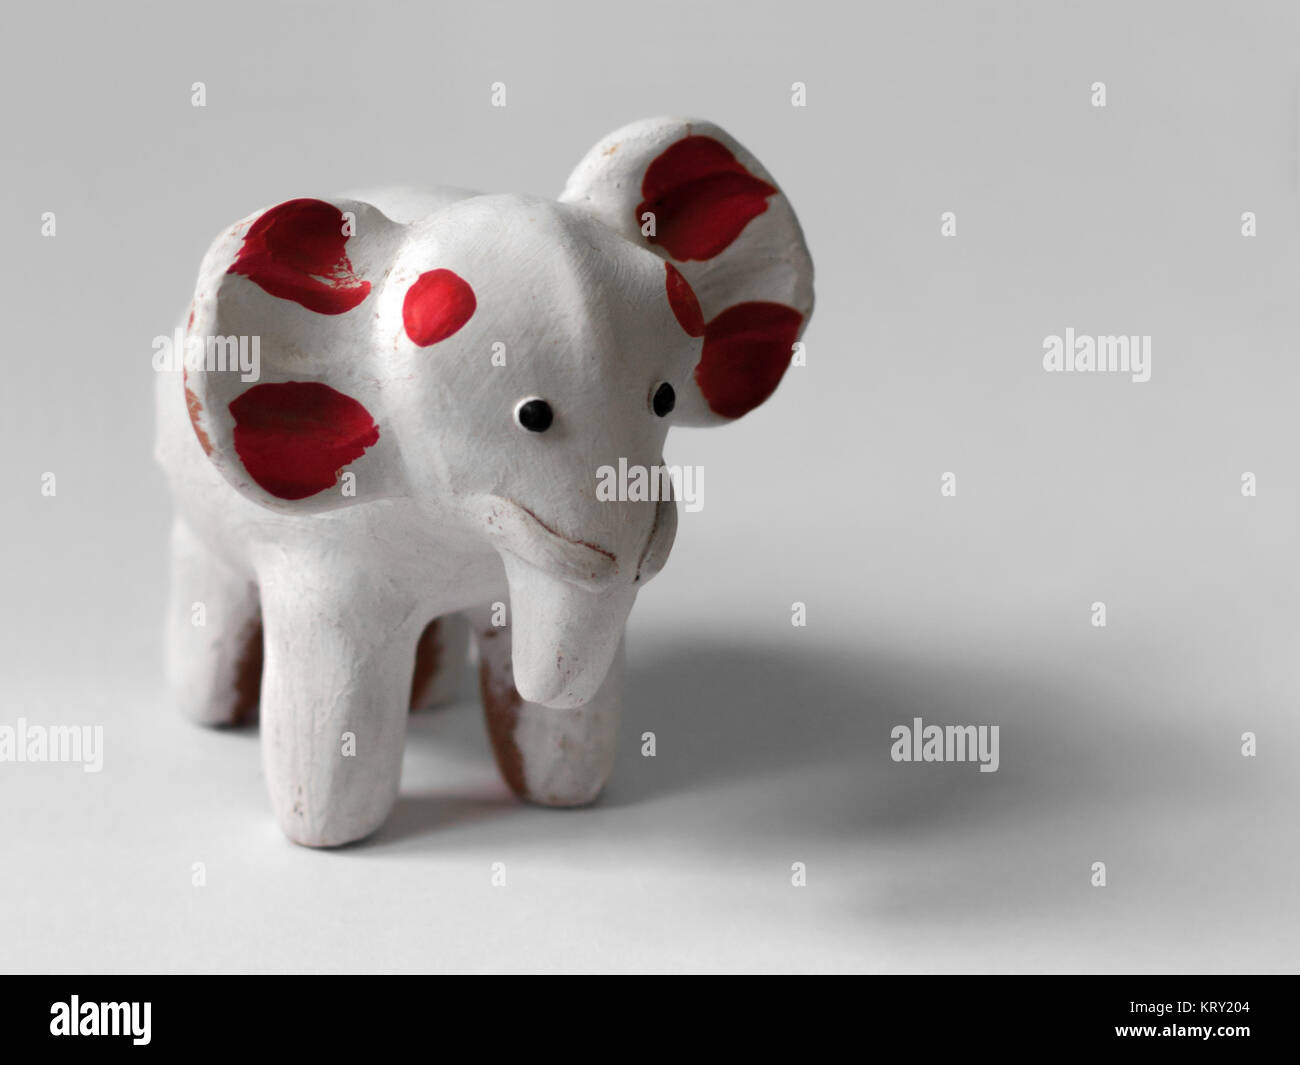 WHITE ELEPHANT SPIELZEUG Stockfoto